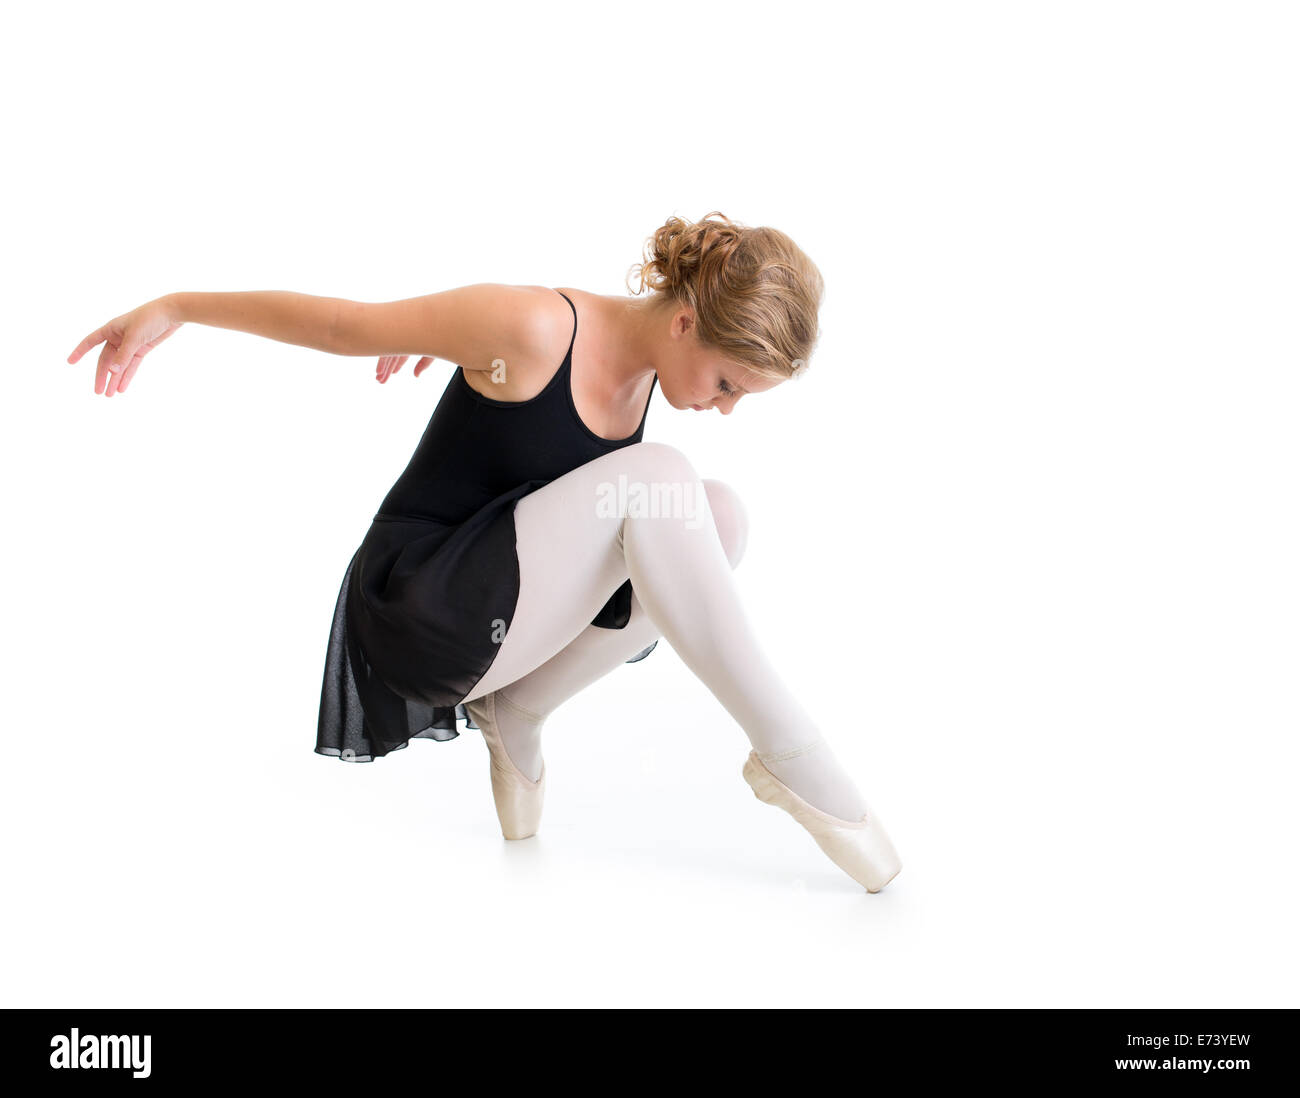 Joven bailarín posando aislado en blanco Foto de stock